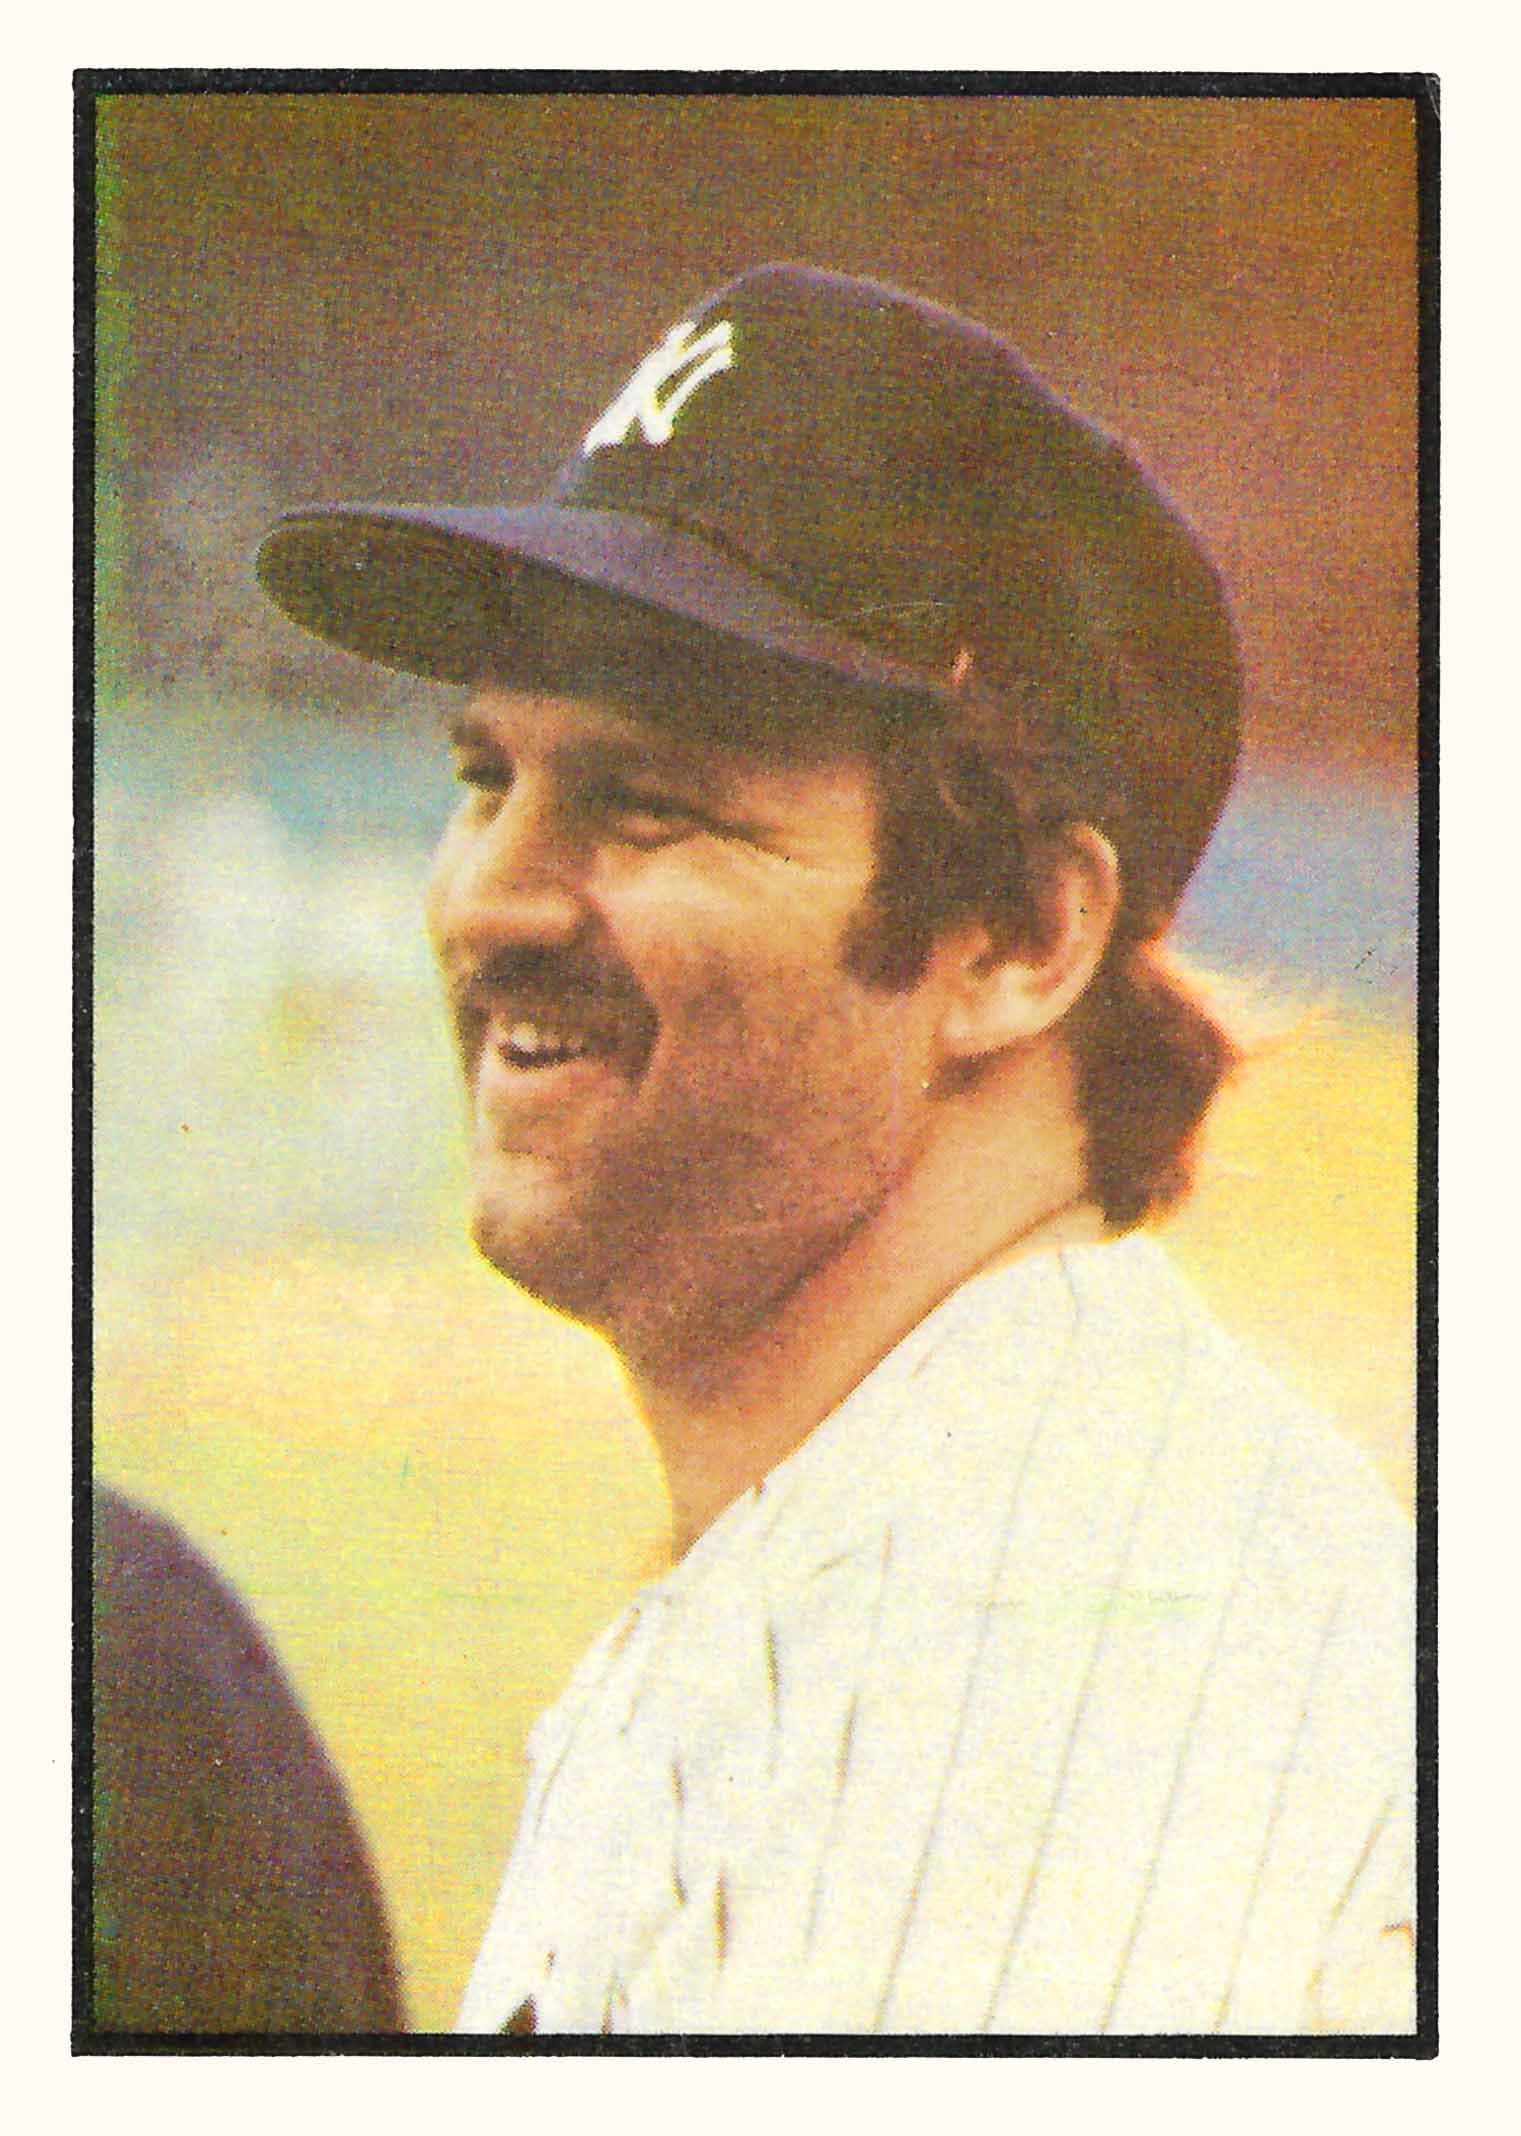 1978 Yankees SSPC Diary